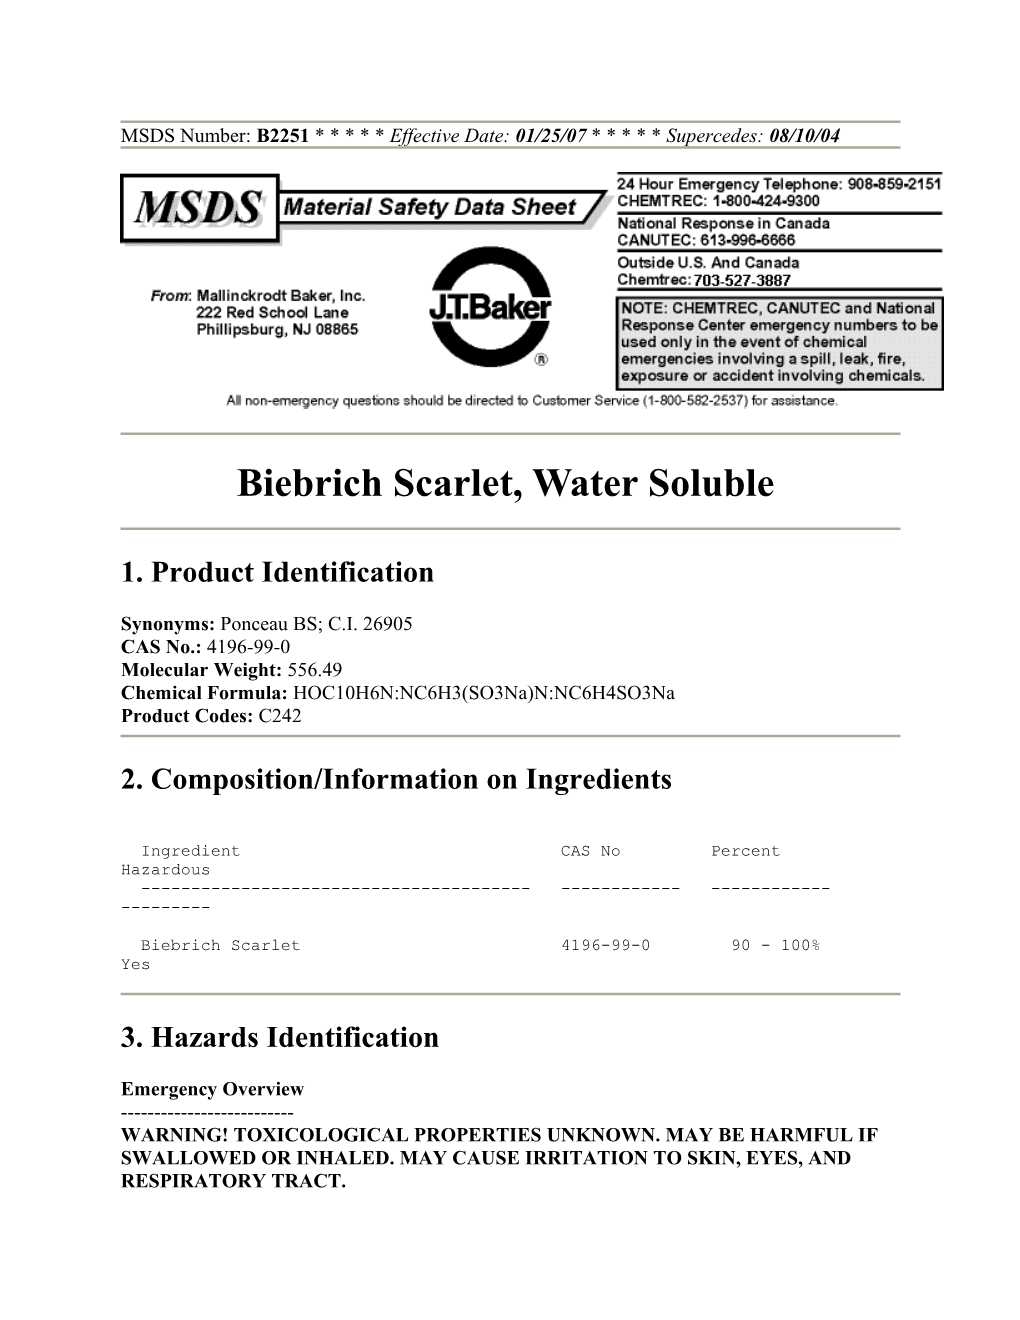 Biebrich Scarlet, Water Soluble